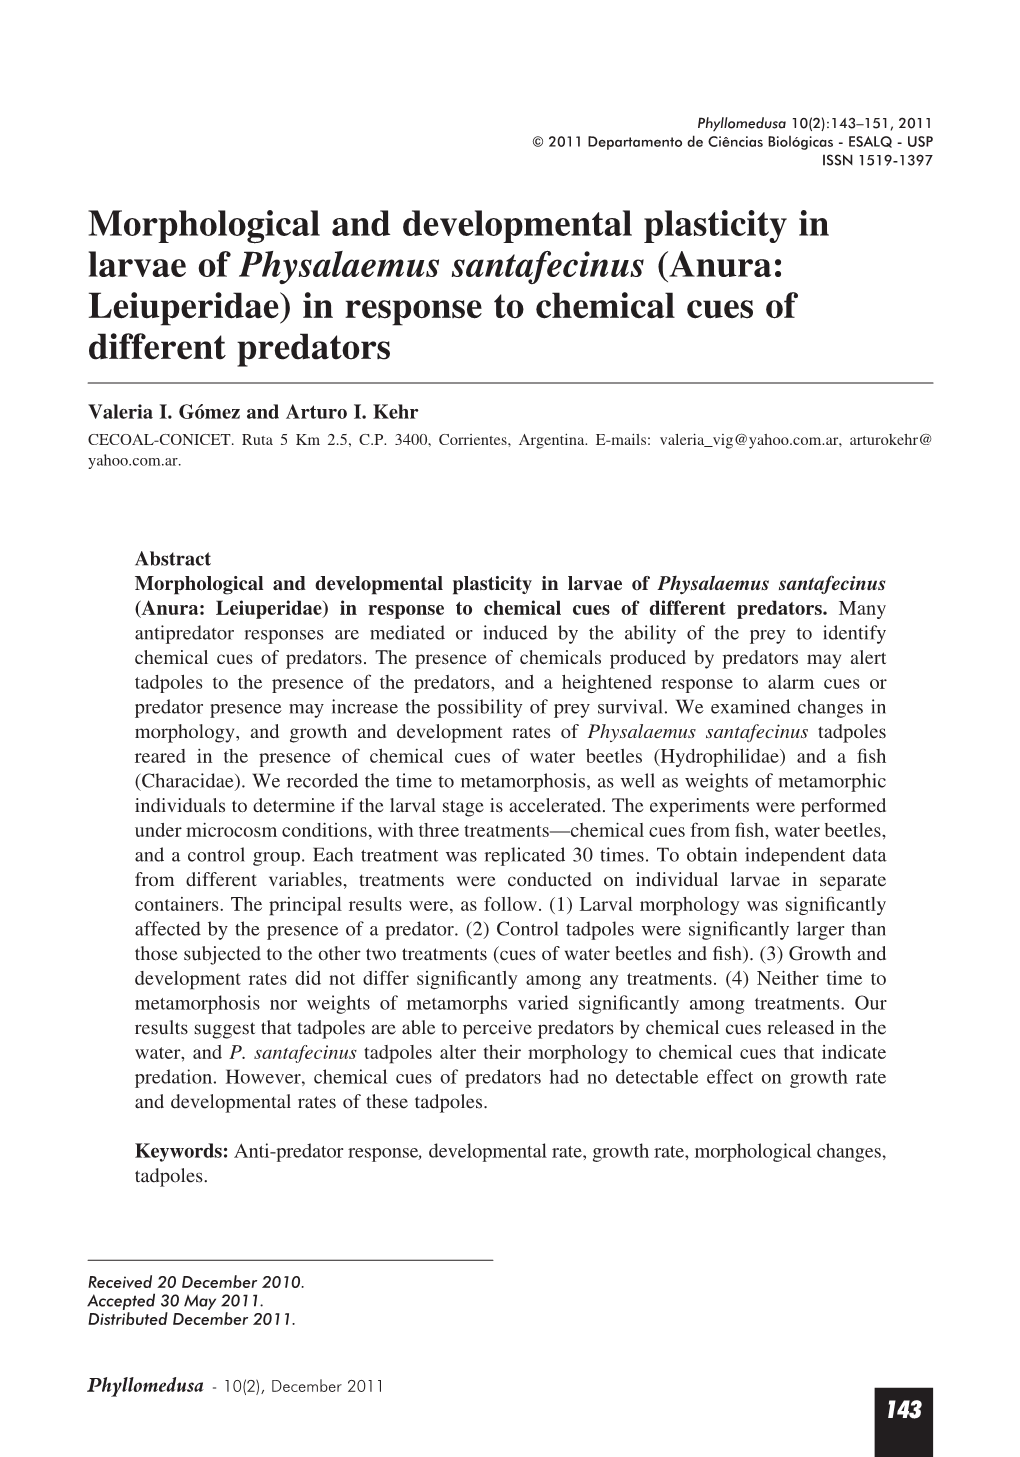 Morphological and Developmental Plasticity in Larvae of Physalaemus Santafecinus (Anura: Leiuperidae) in Response to Chemical Cues of Different Predators